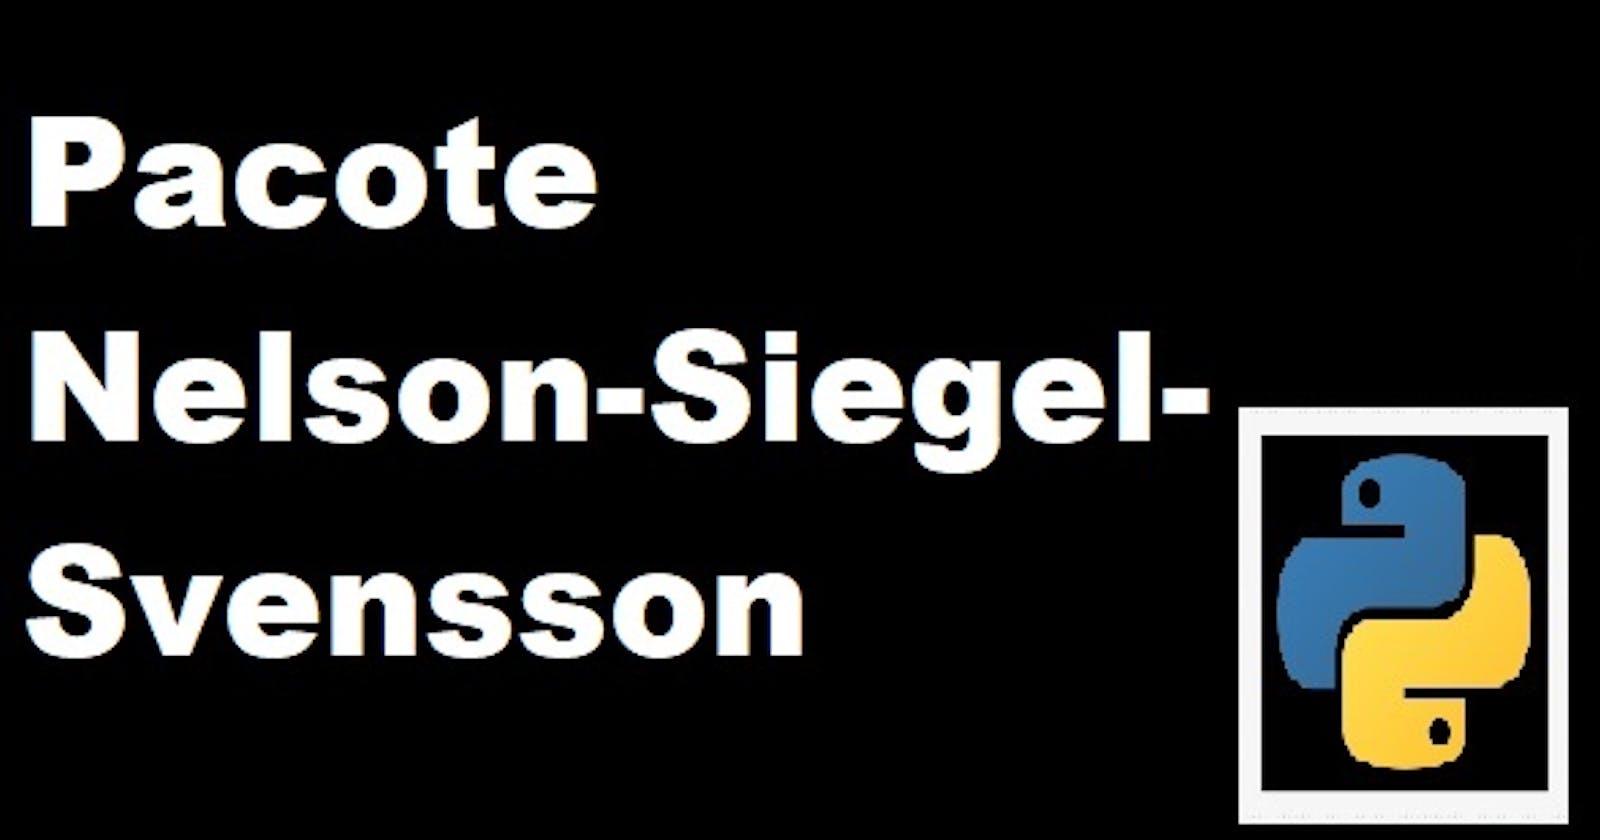 Pacote Nelson-Siegel-Svensson